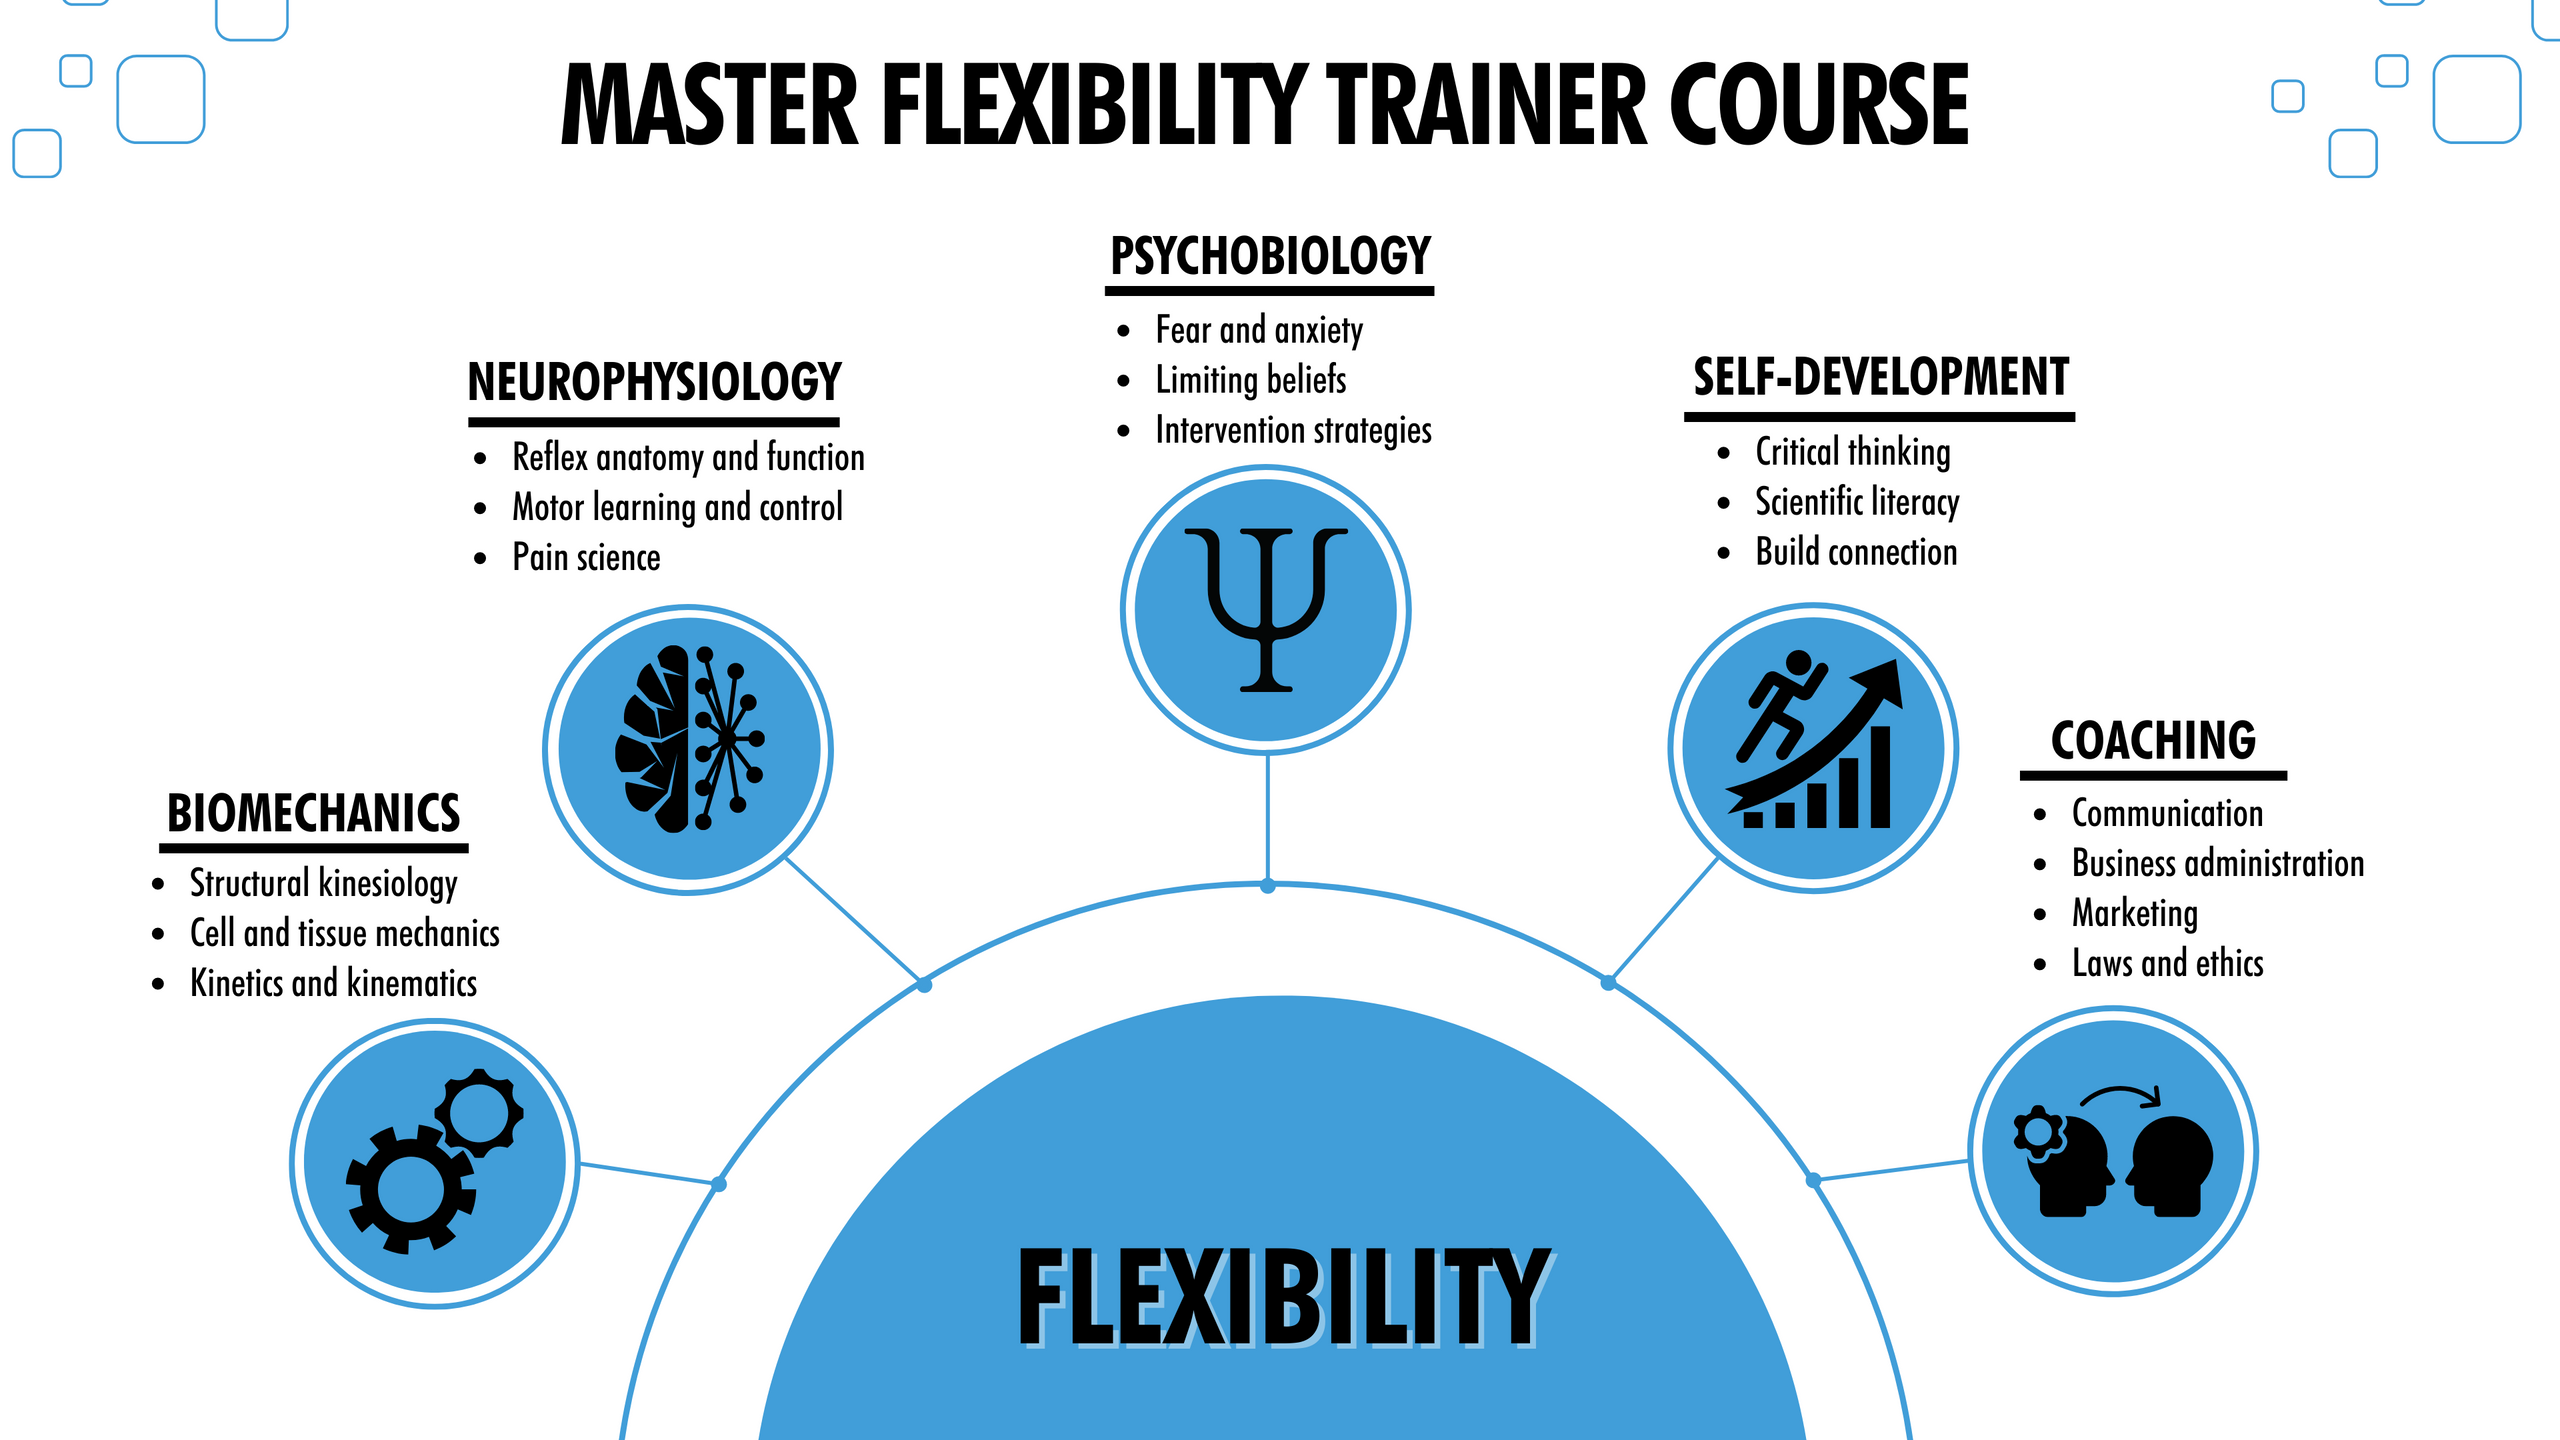 Dan Van Zandt – Master Flexibility Trainer Course